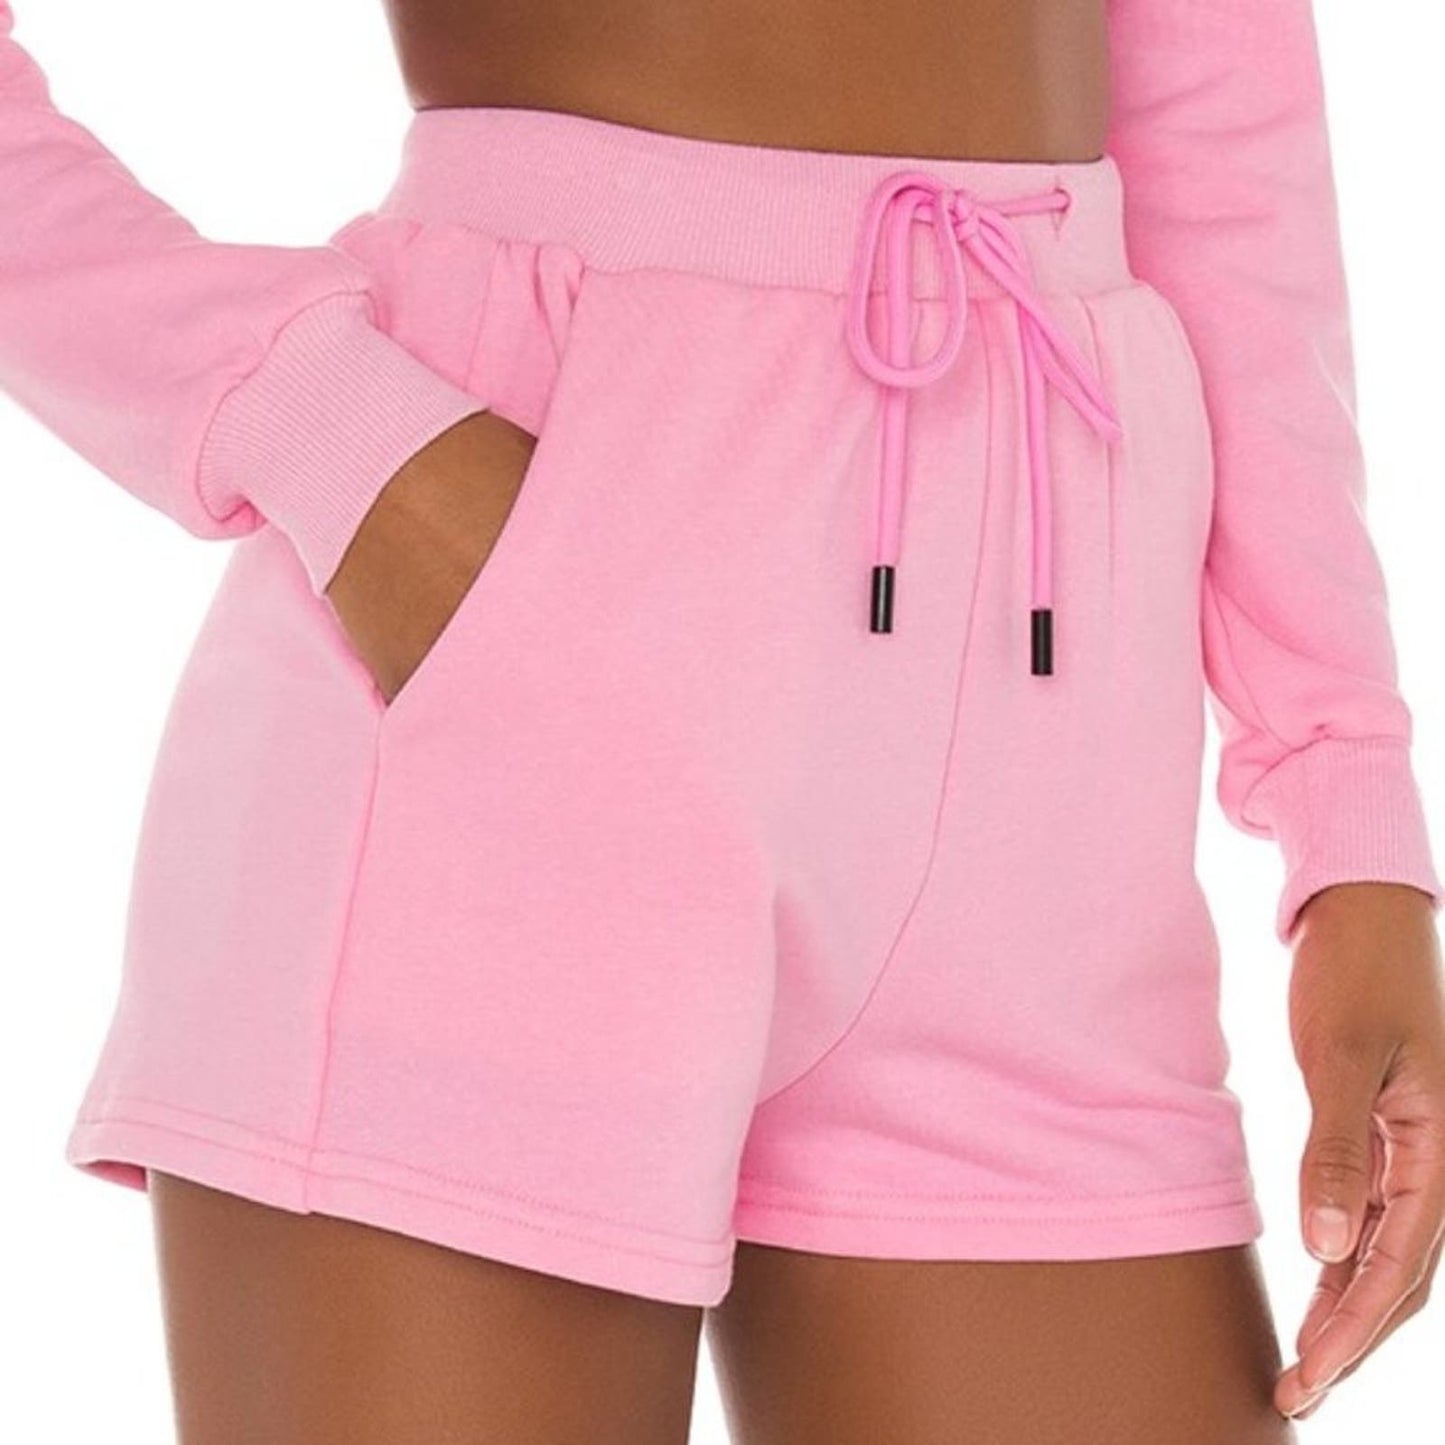 Revolve Superdown Danna Fleece Shorts in Pink NWOT Size XS